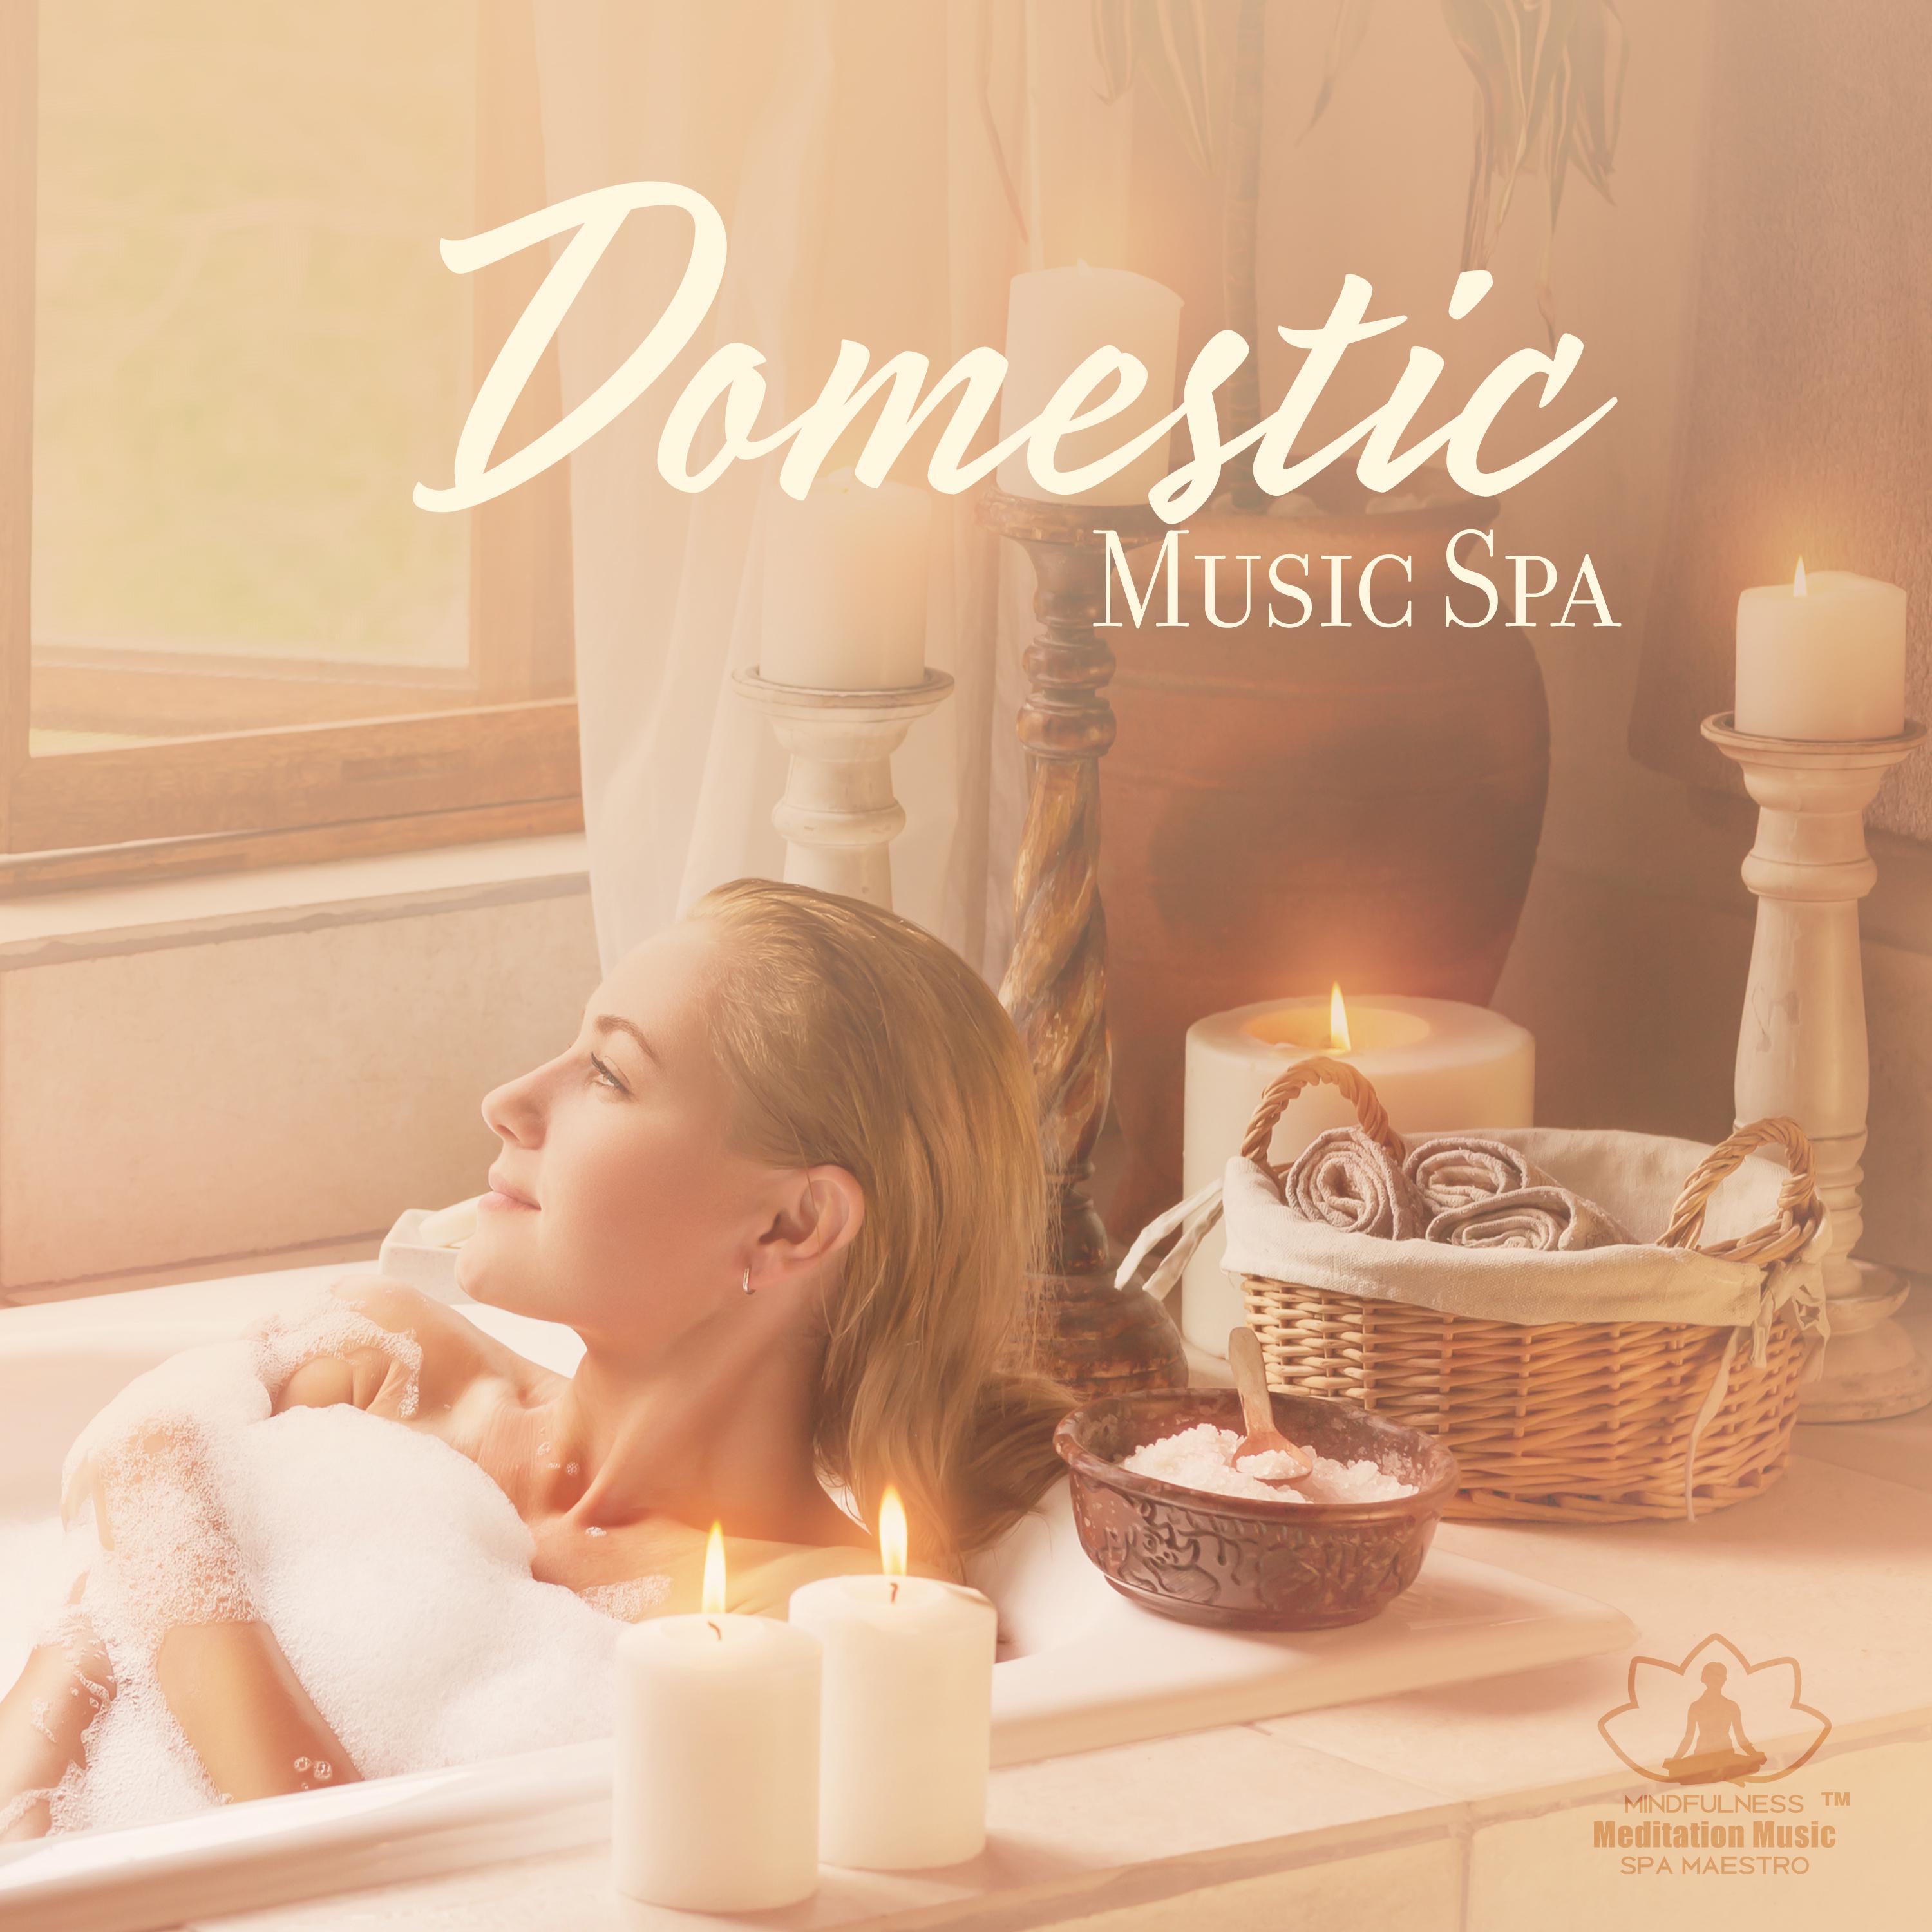 Domestic Music Spa - Salon curatif, Massage and spa music, Aromatherapy, Good condition